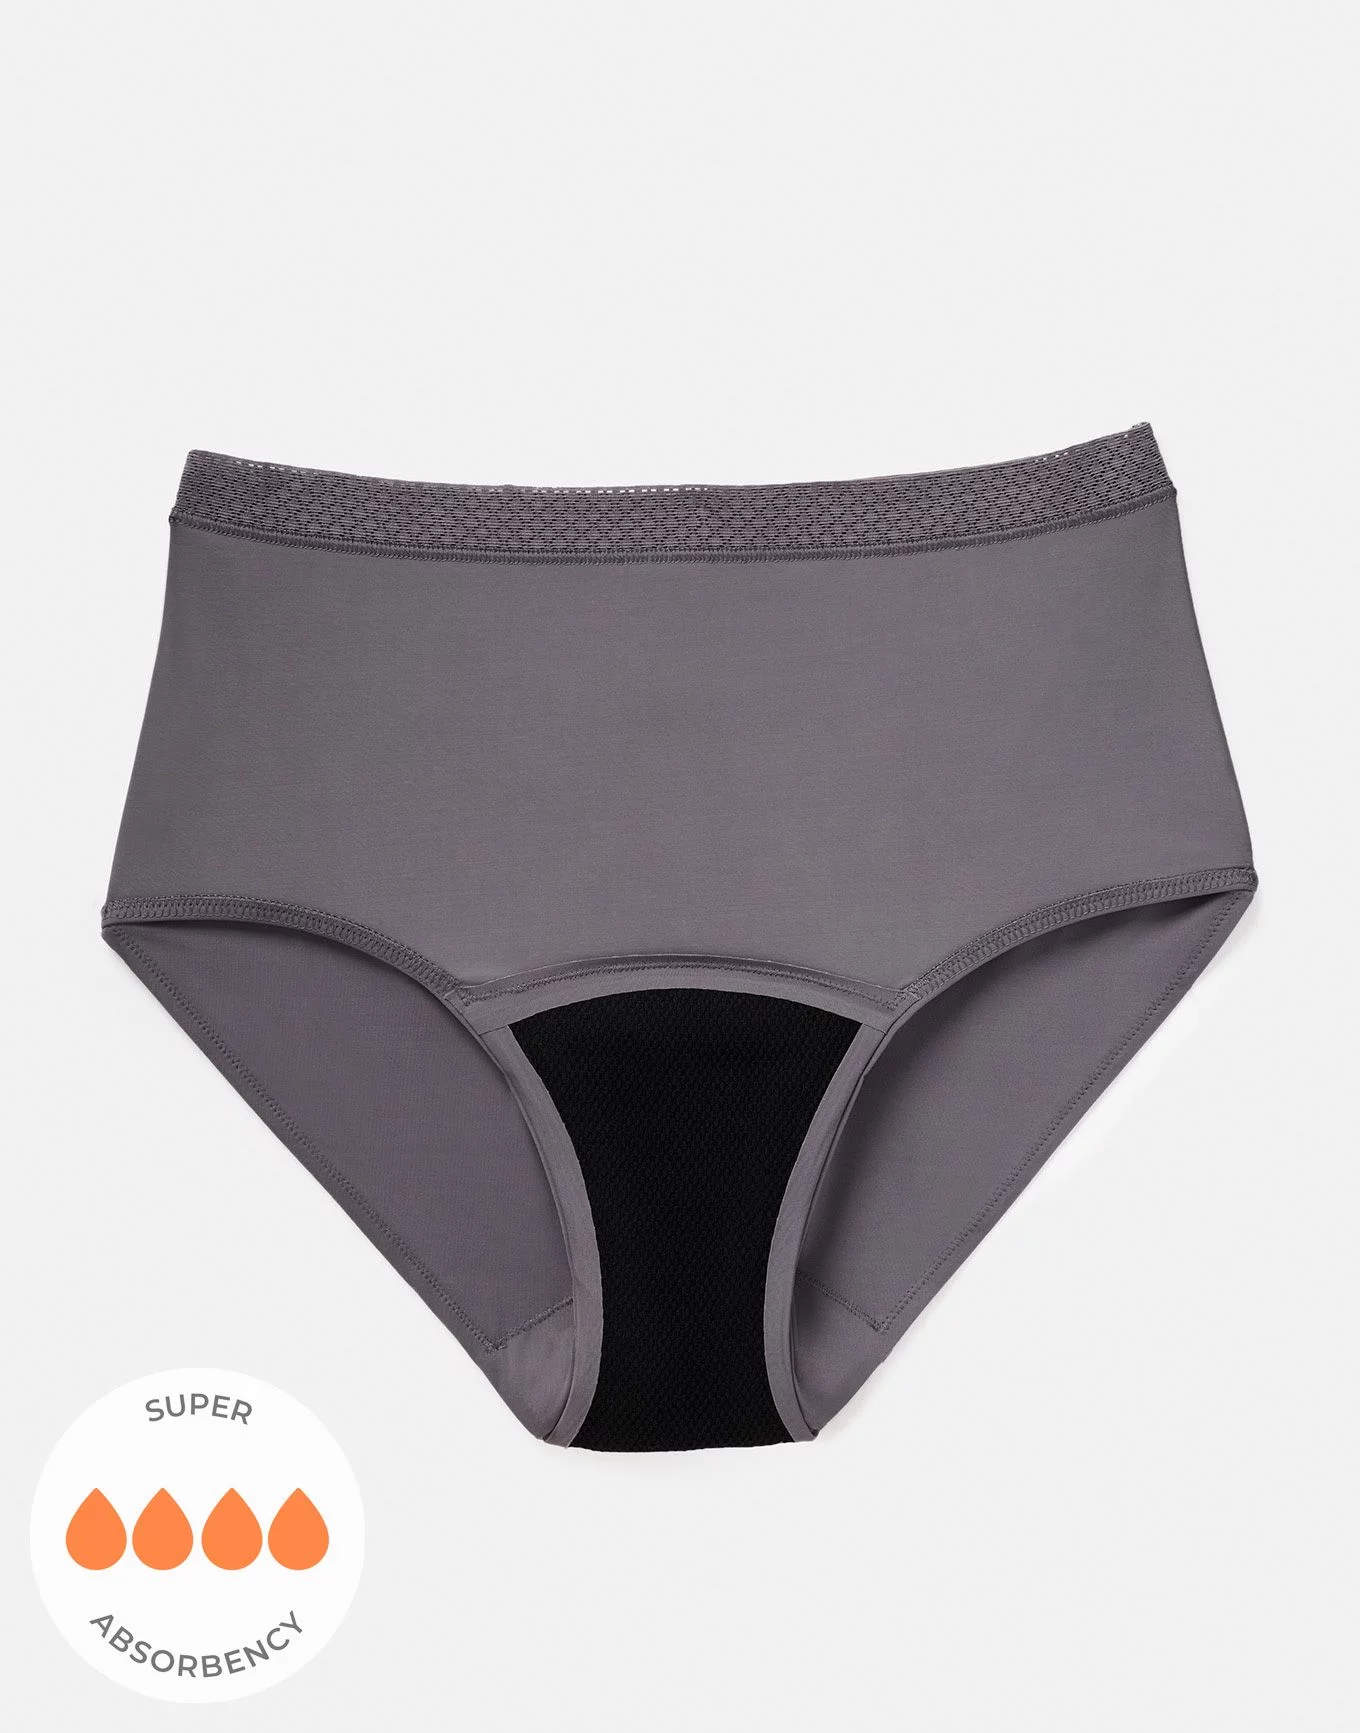 THINX Sport Period Underwear for Women Spicy Red Size Medium Menstrual  Panties for sale online